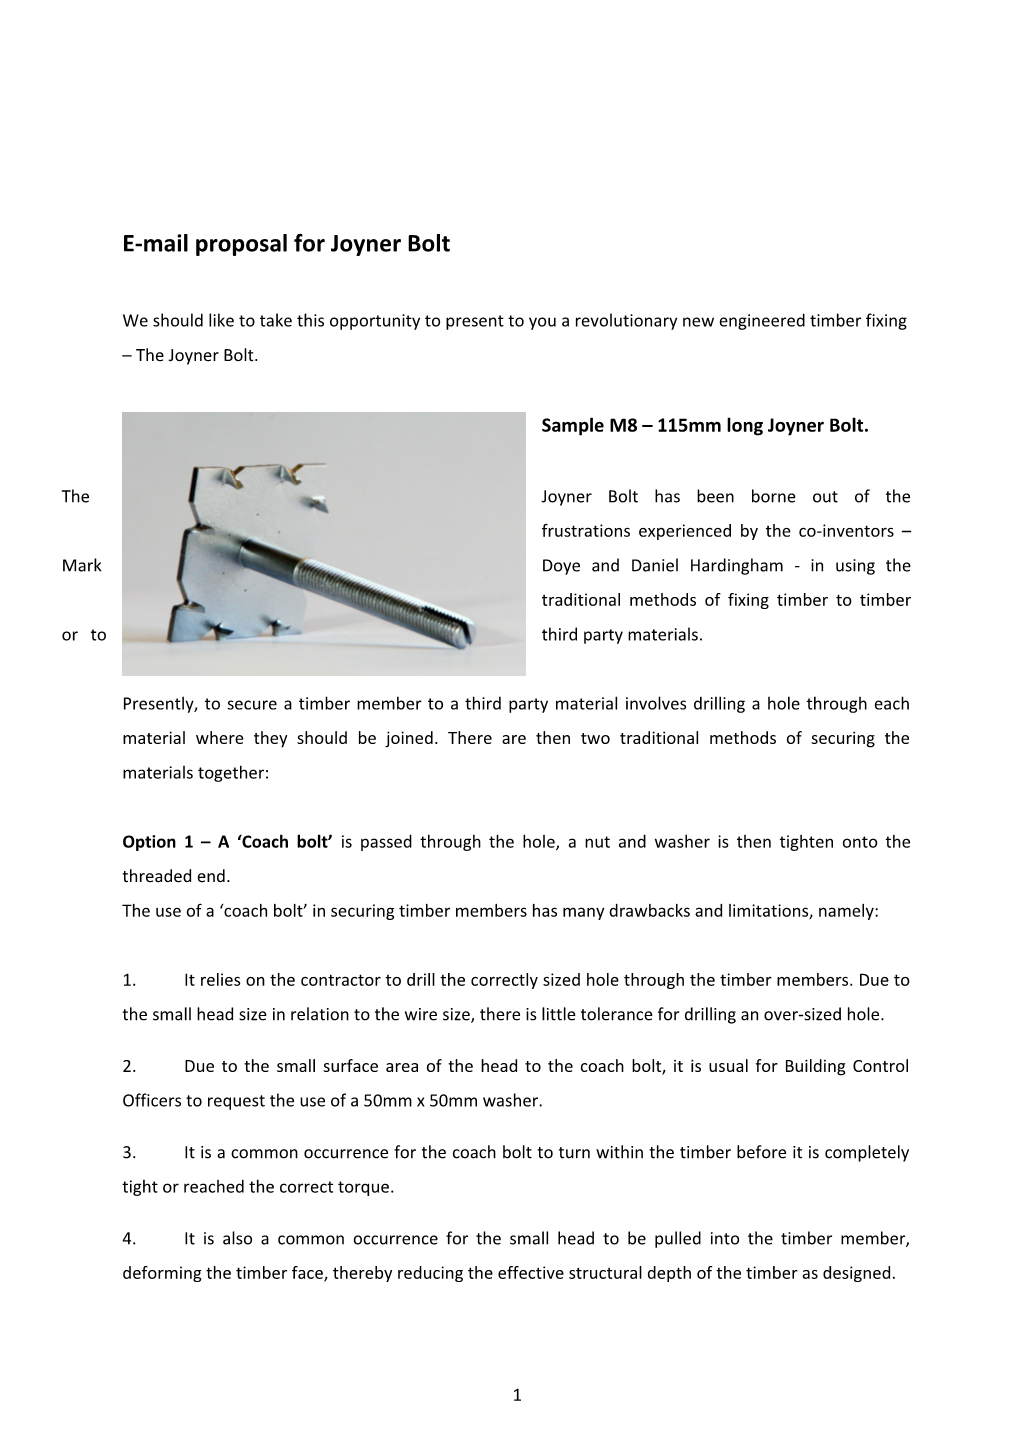 E-Mail Proposal for Joyner Bolt